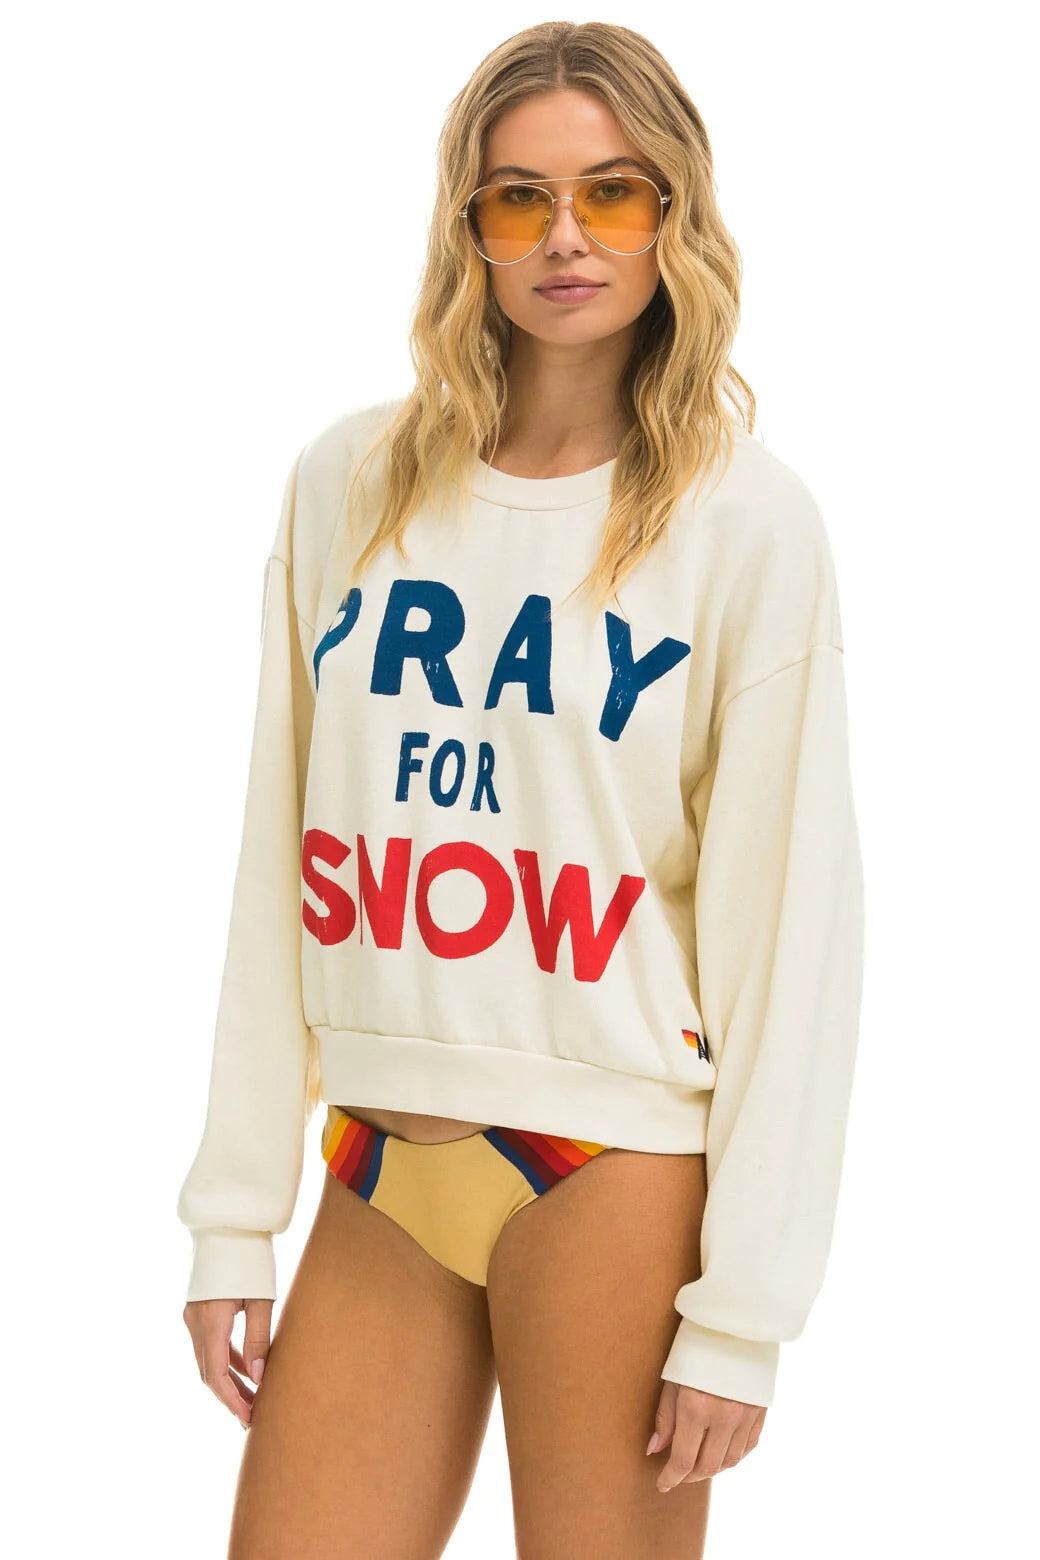 Pray For Snow Crewneck Sweatshirt